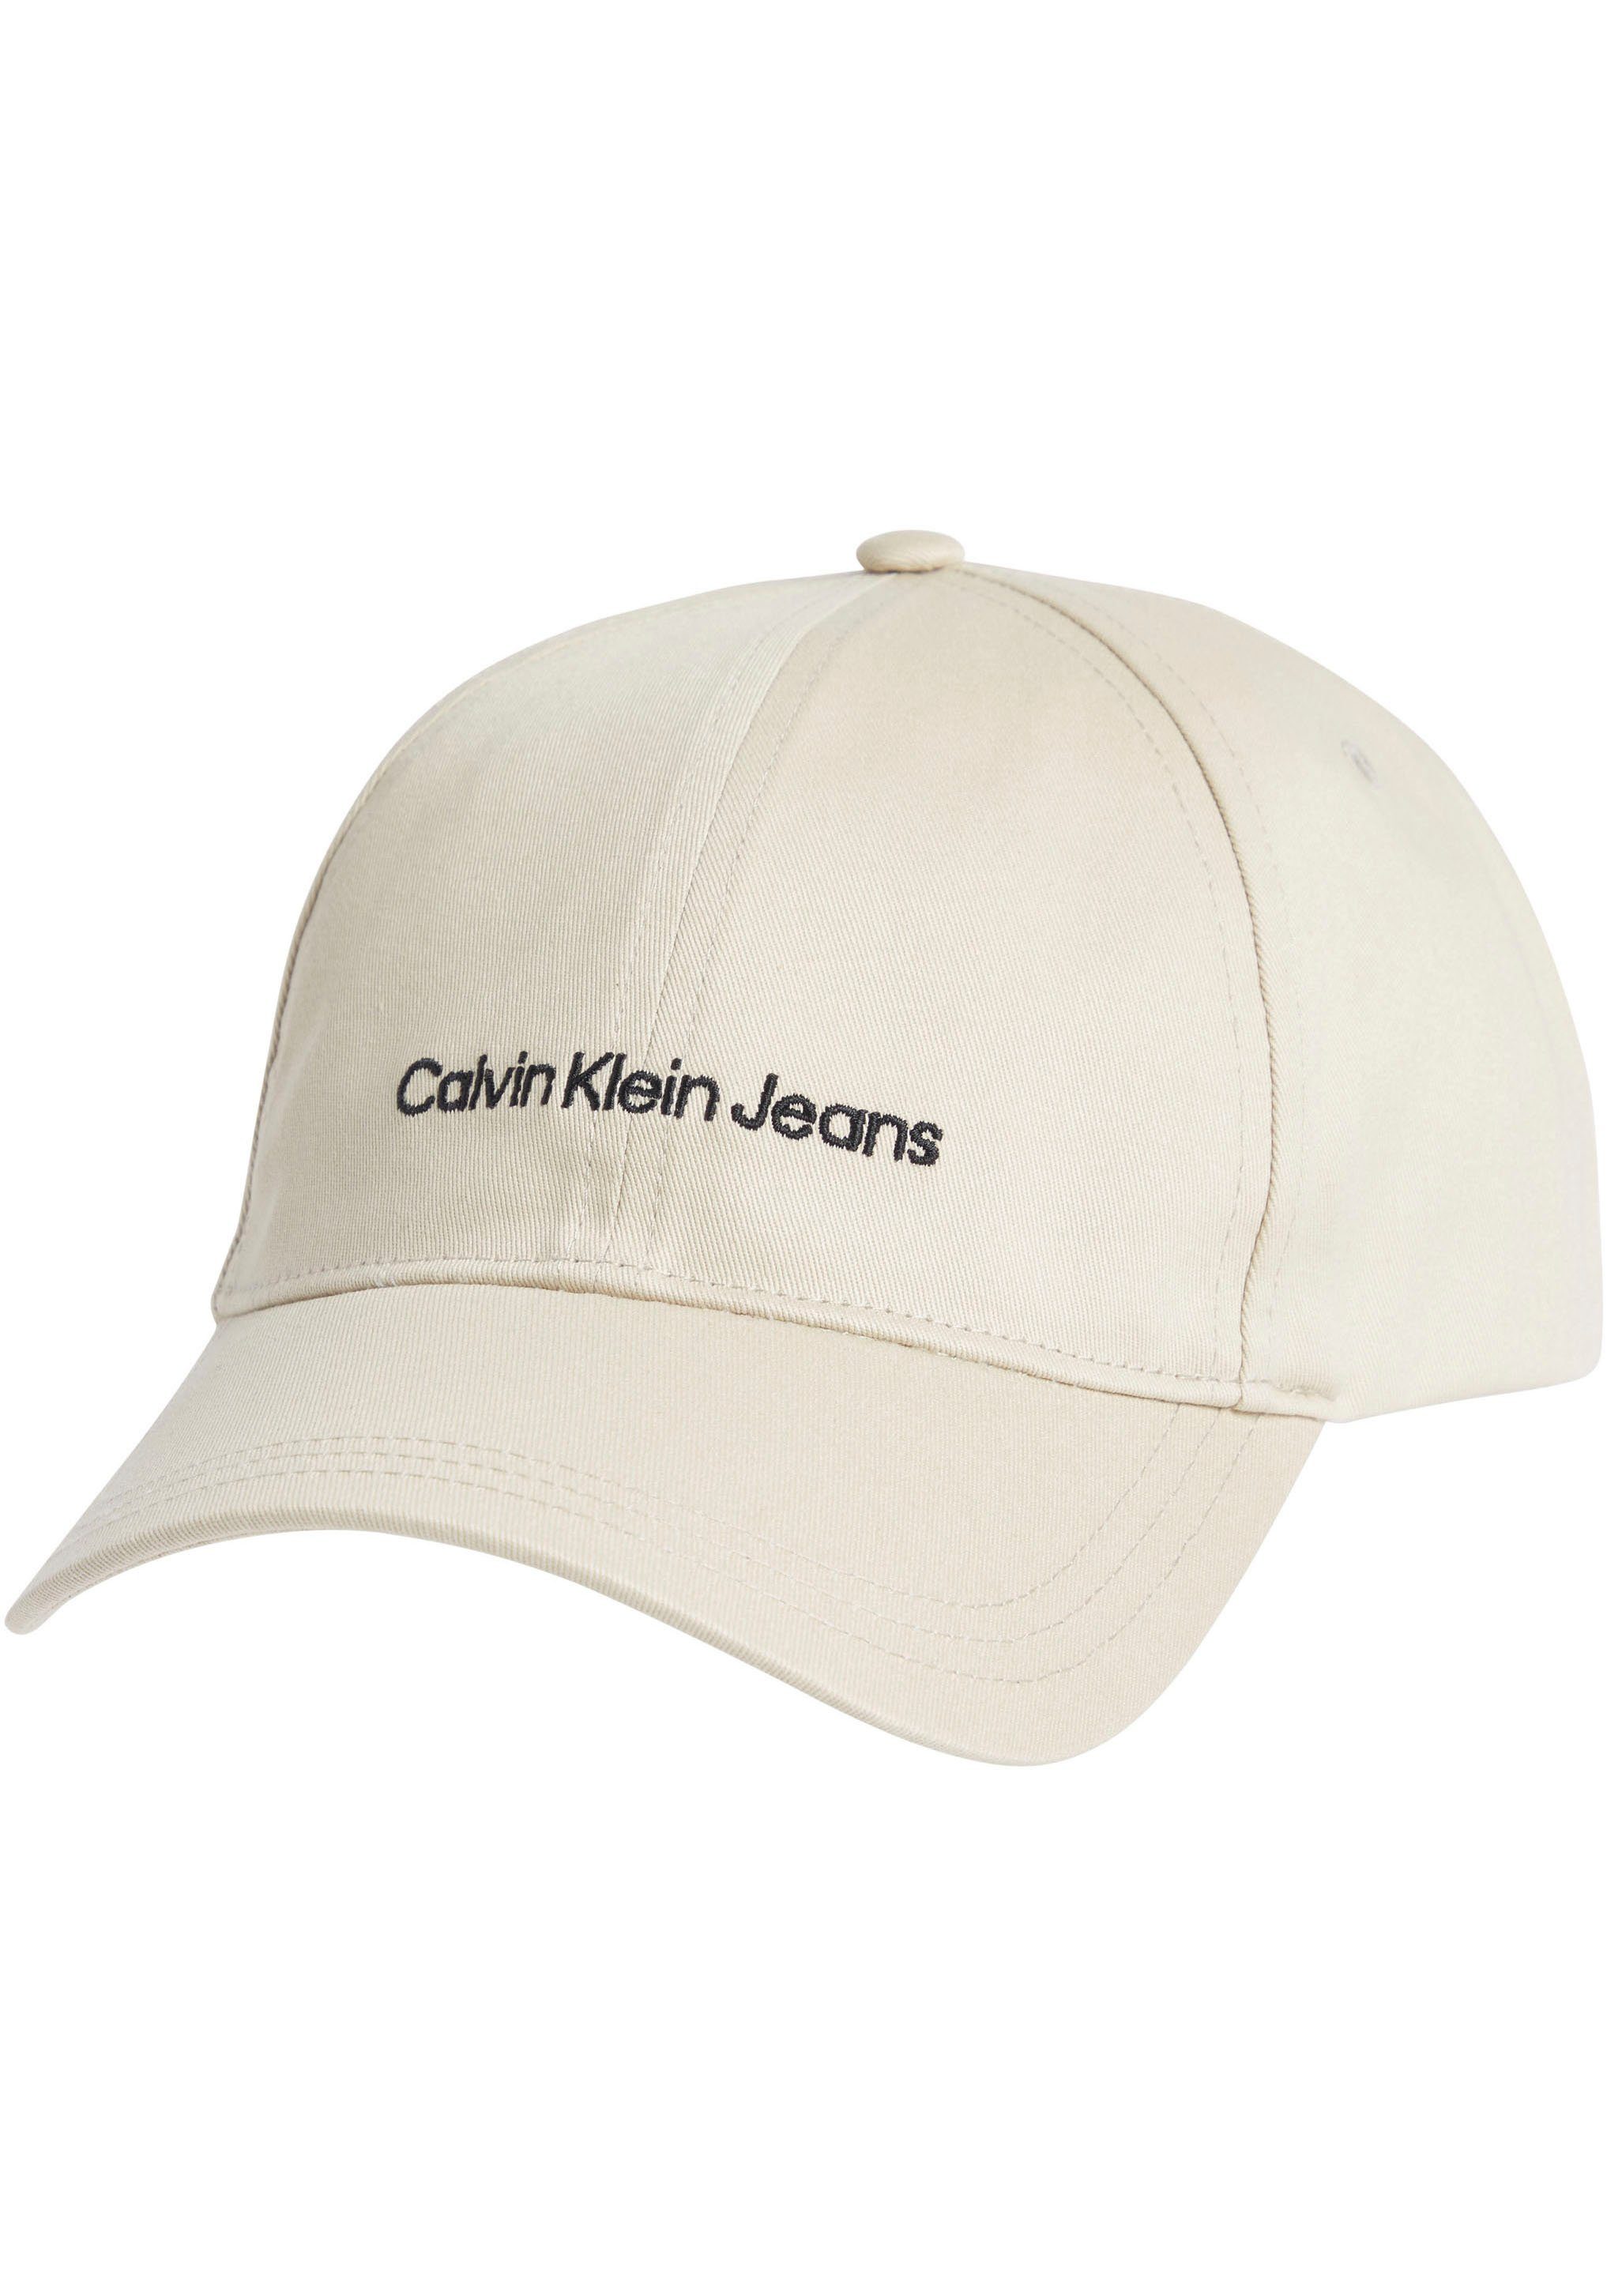 Calvin Klein Jeans Baseball Cap INSTITUTIONAL Calvin CAP, Klein Jeans von Cap